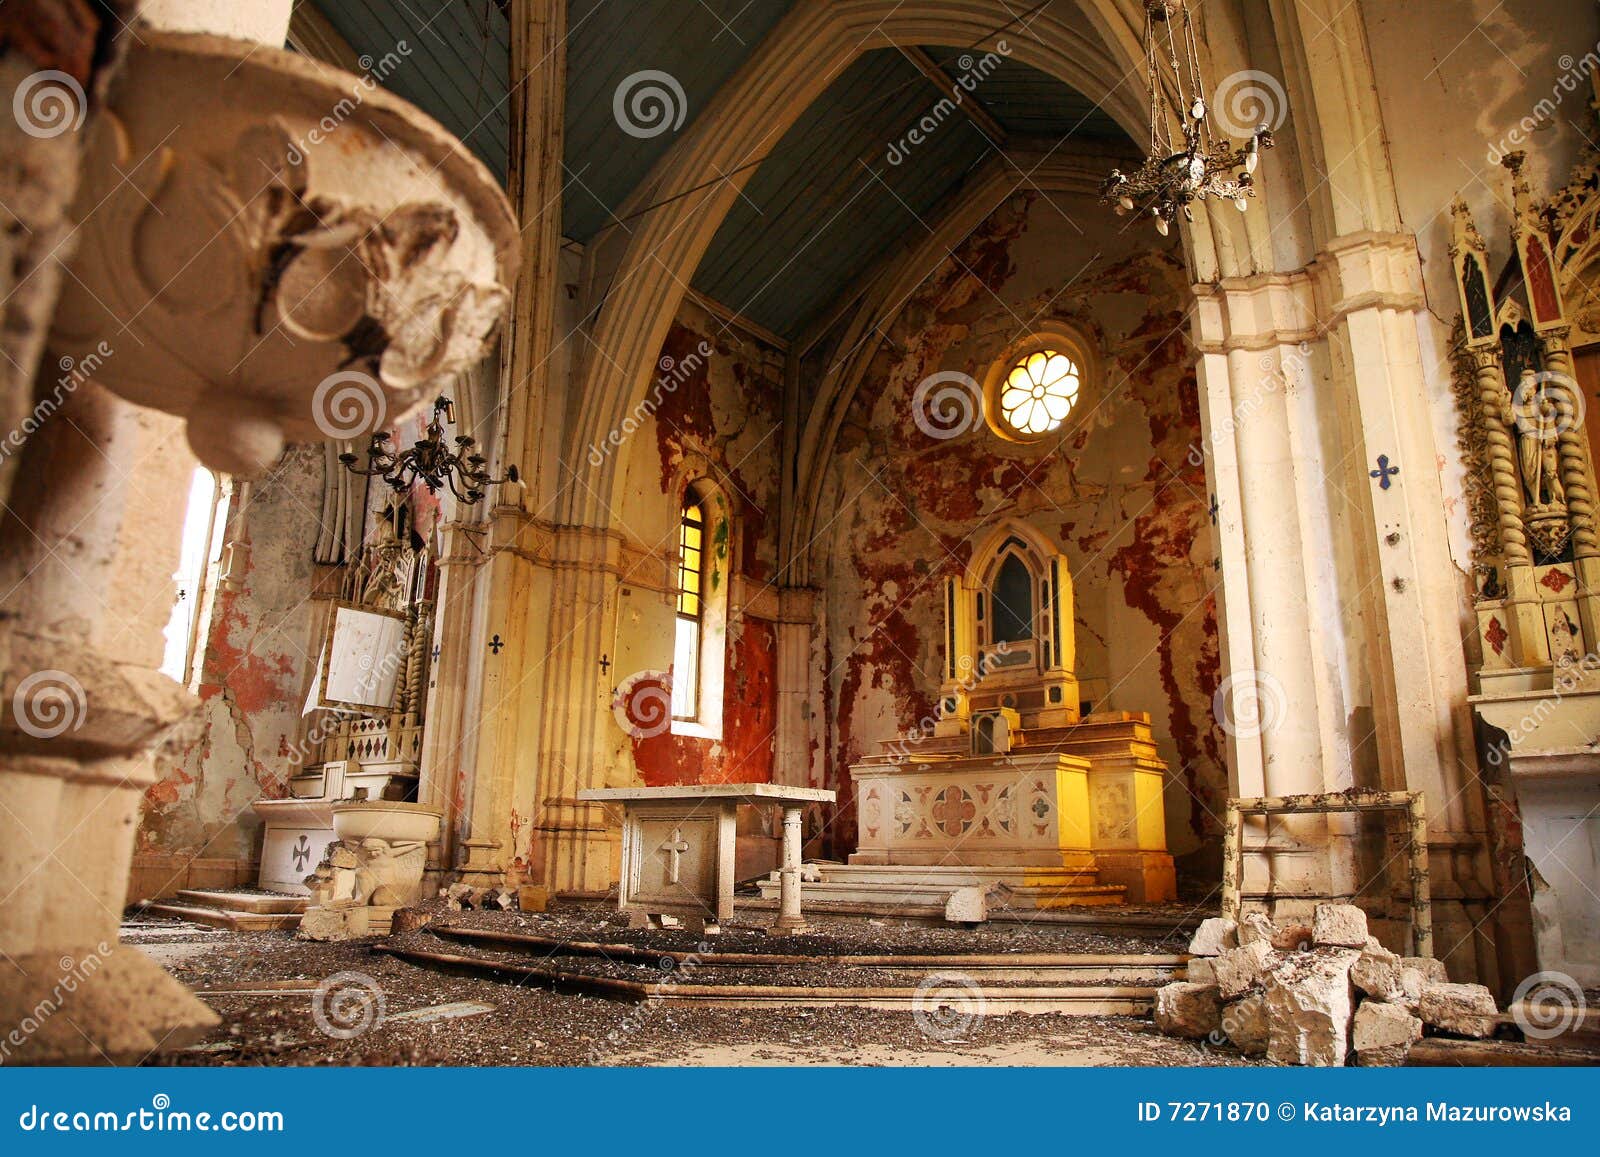 Old Demolished Church Inside Interior Stock Photo